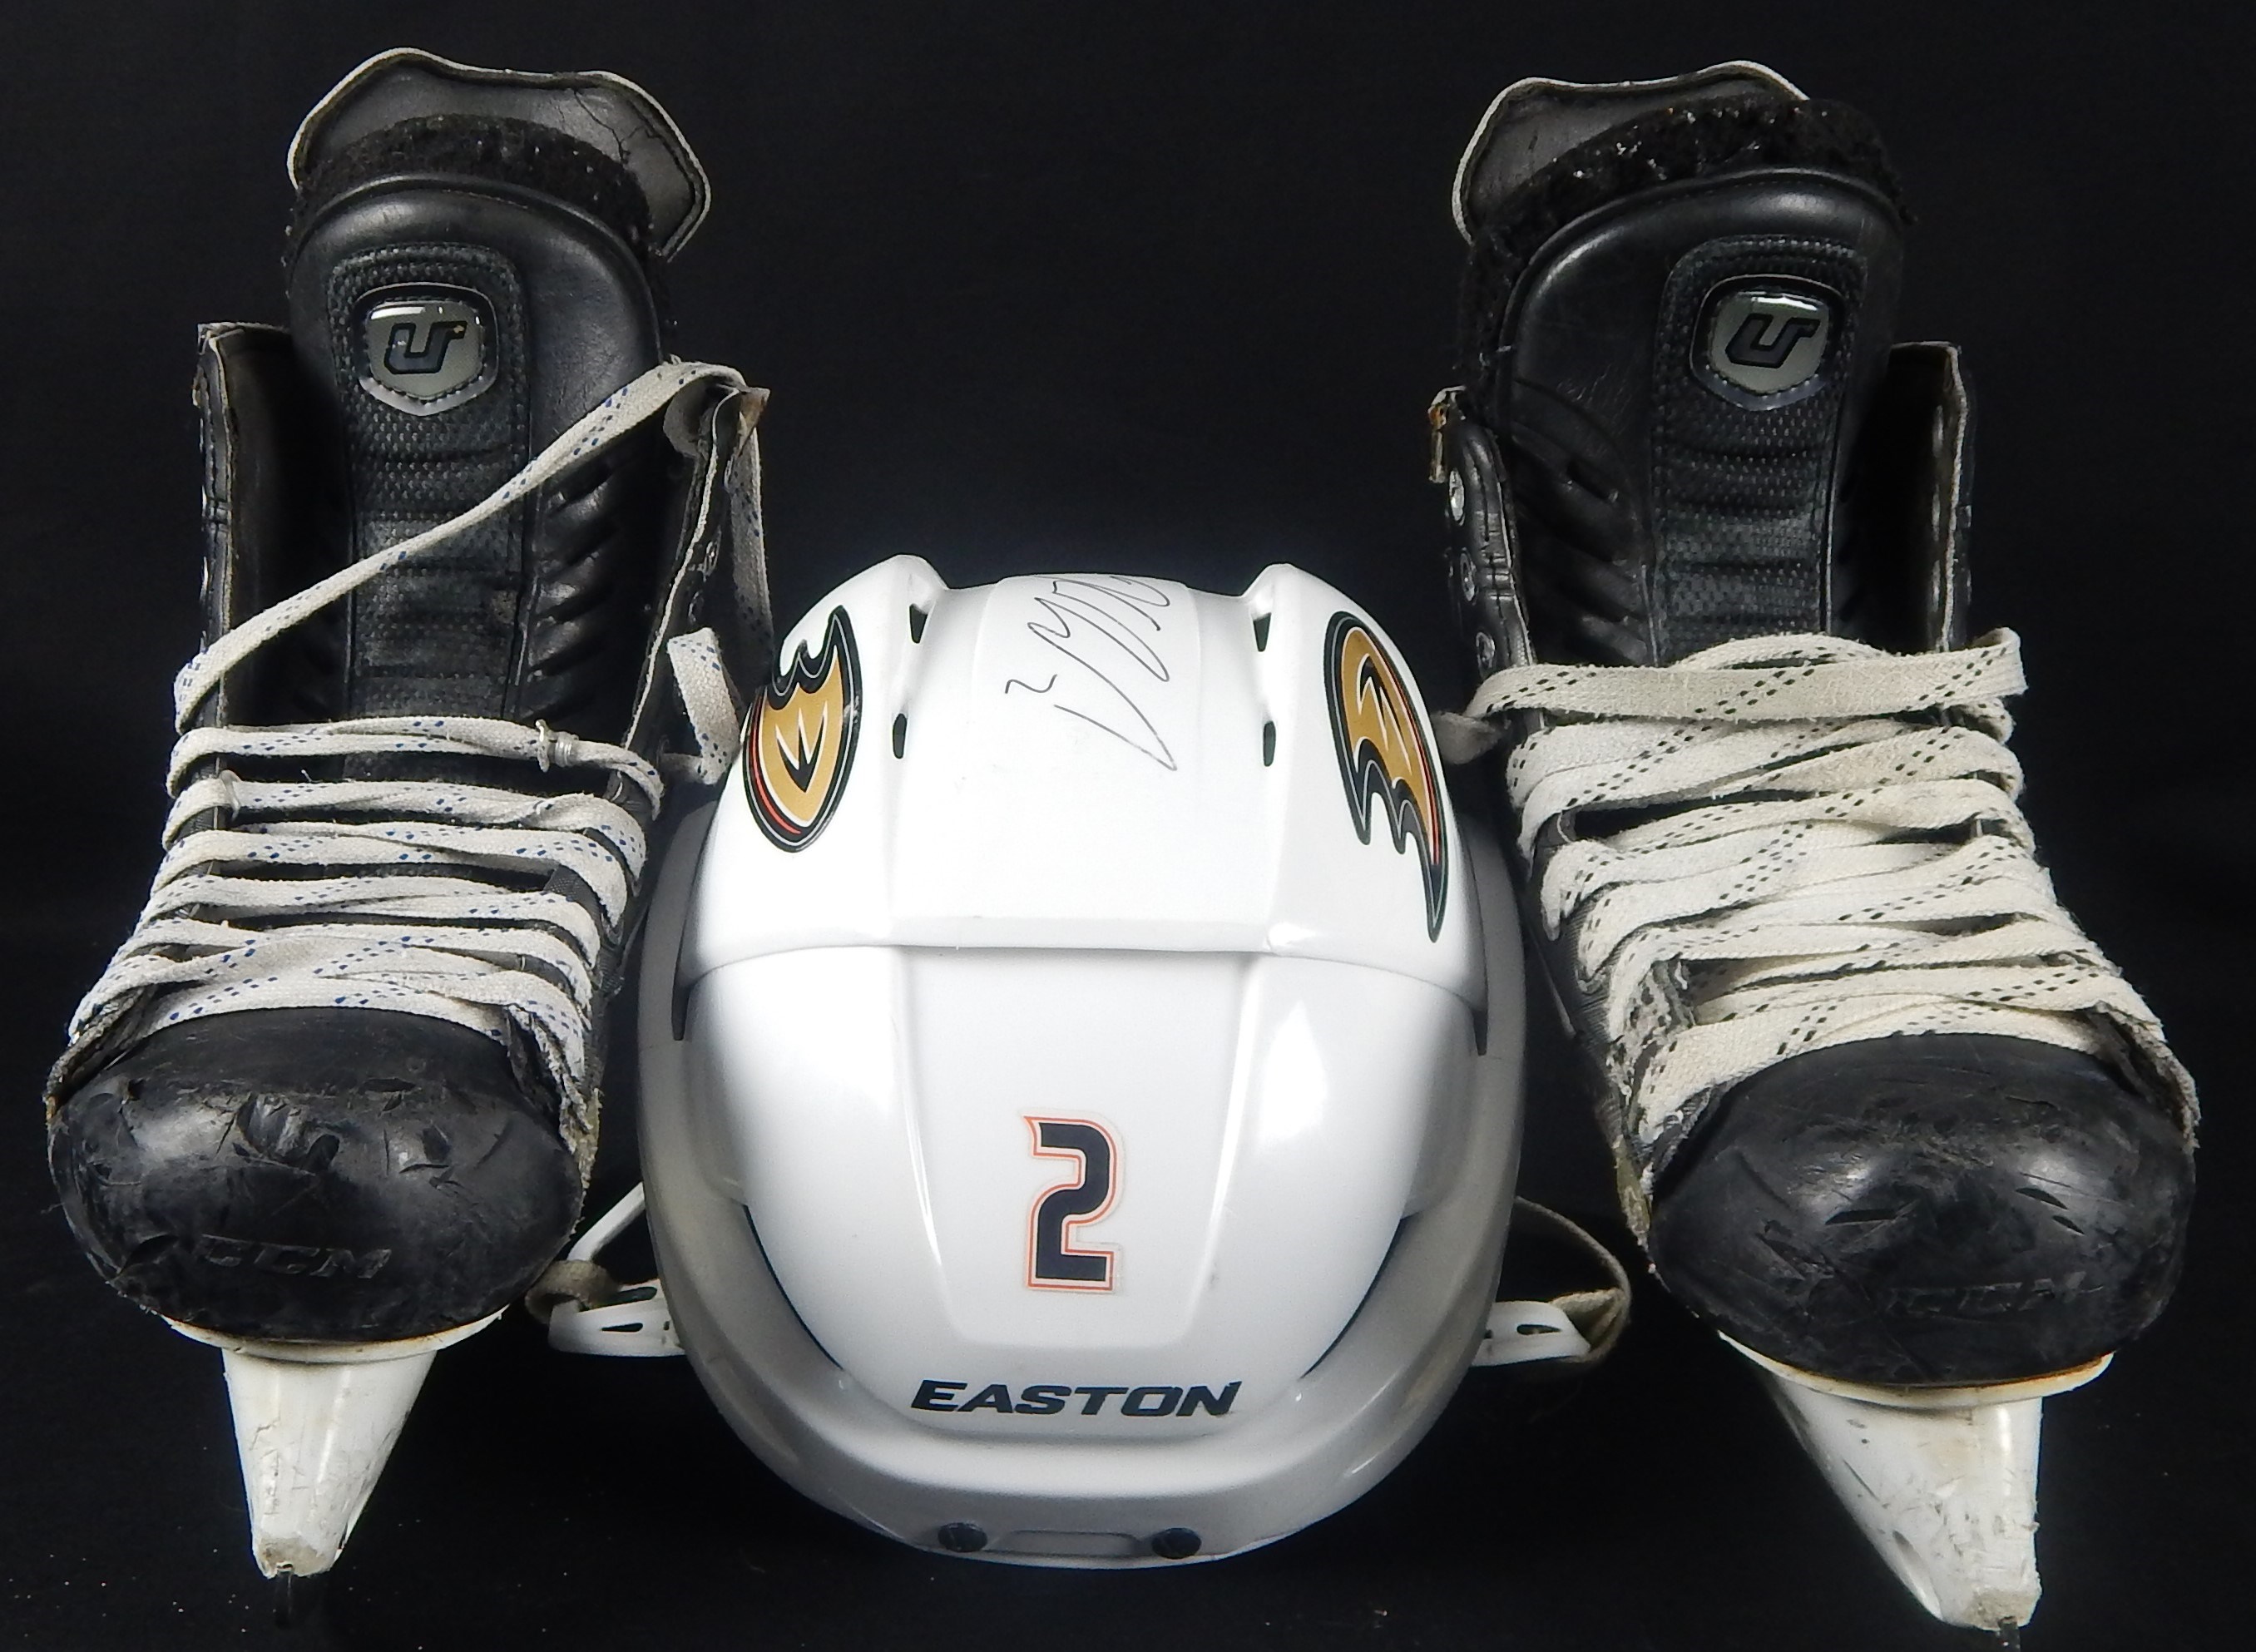 Circa 2015-16 Anaheim Ducks Kevin Bieska Game Worn/Signed Helmet and Game Used Skates